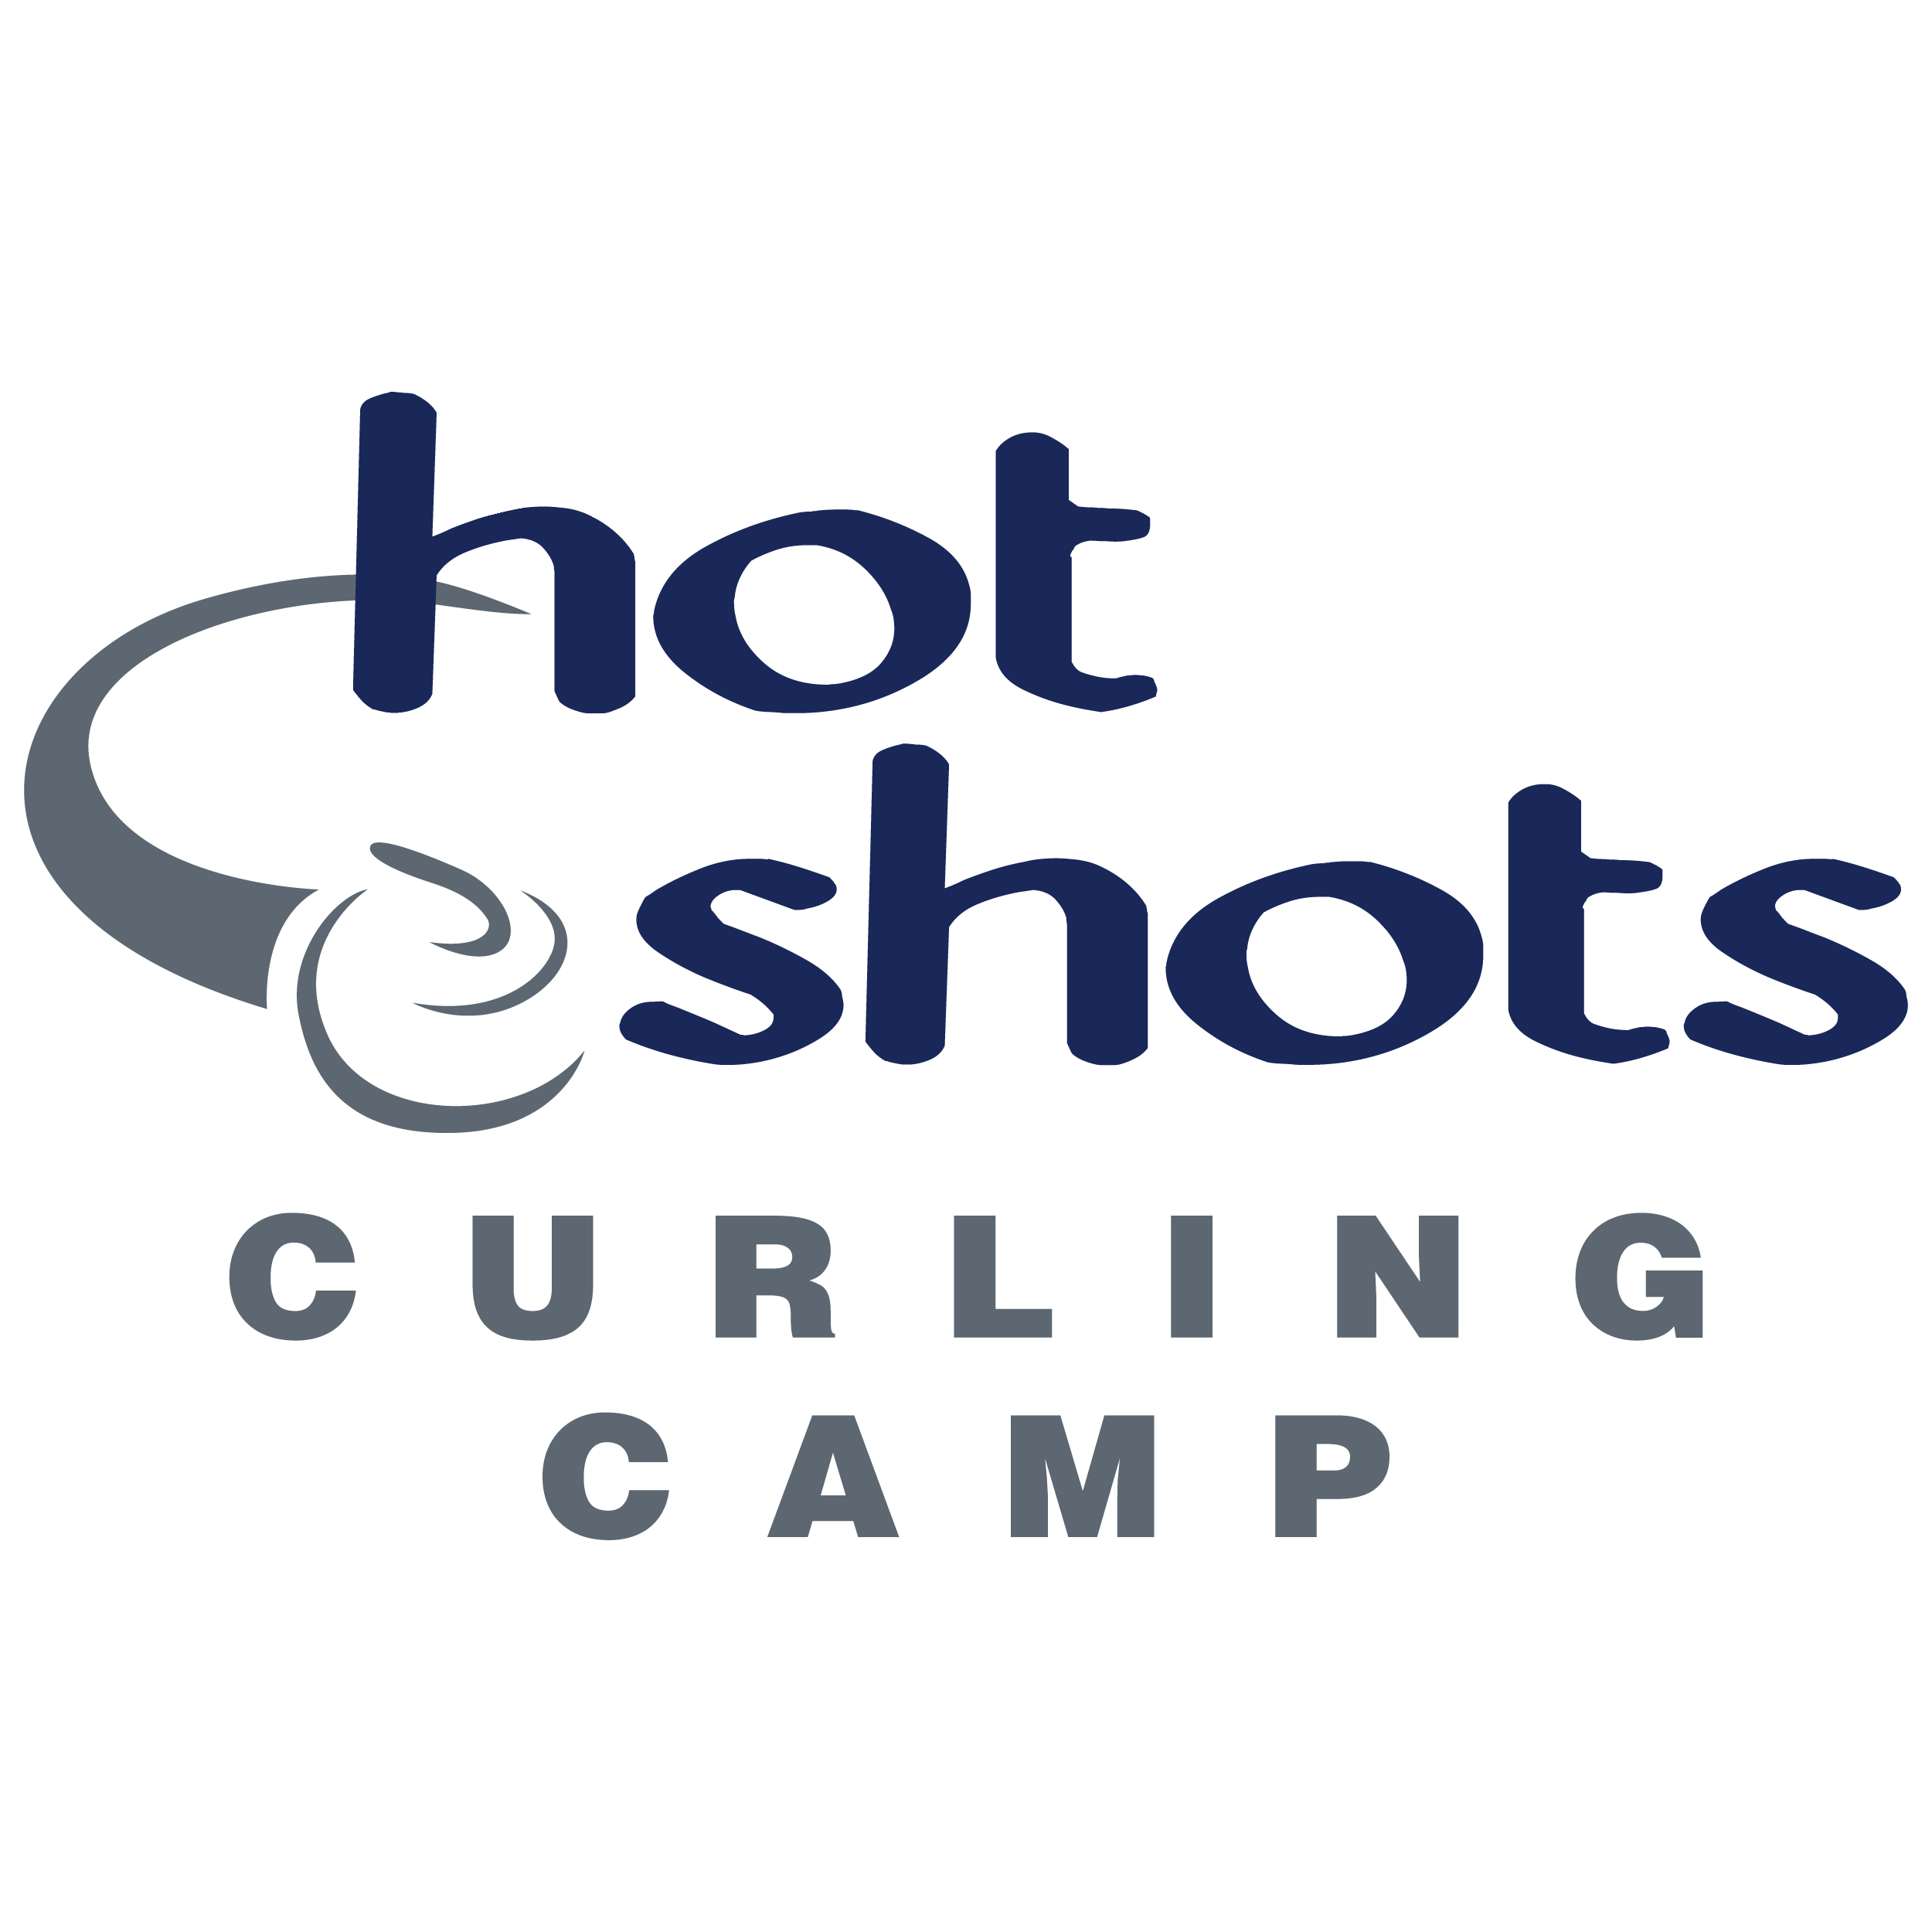 Hot Shots Curling Camp Logo - Square 2